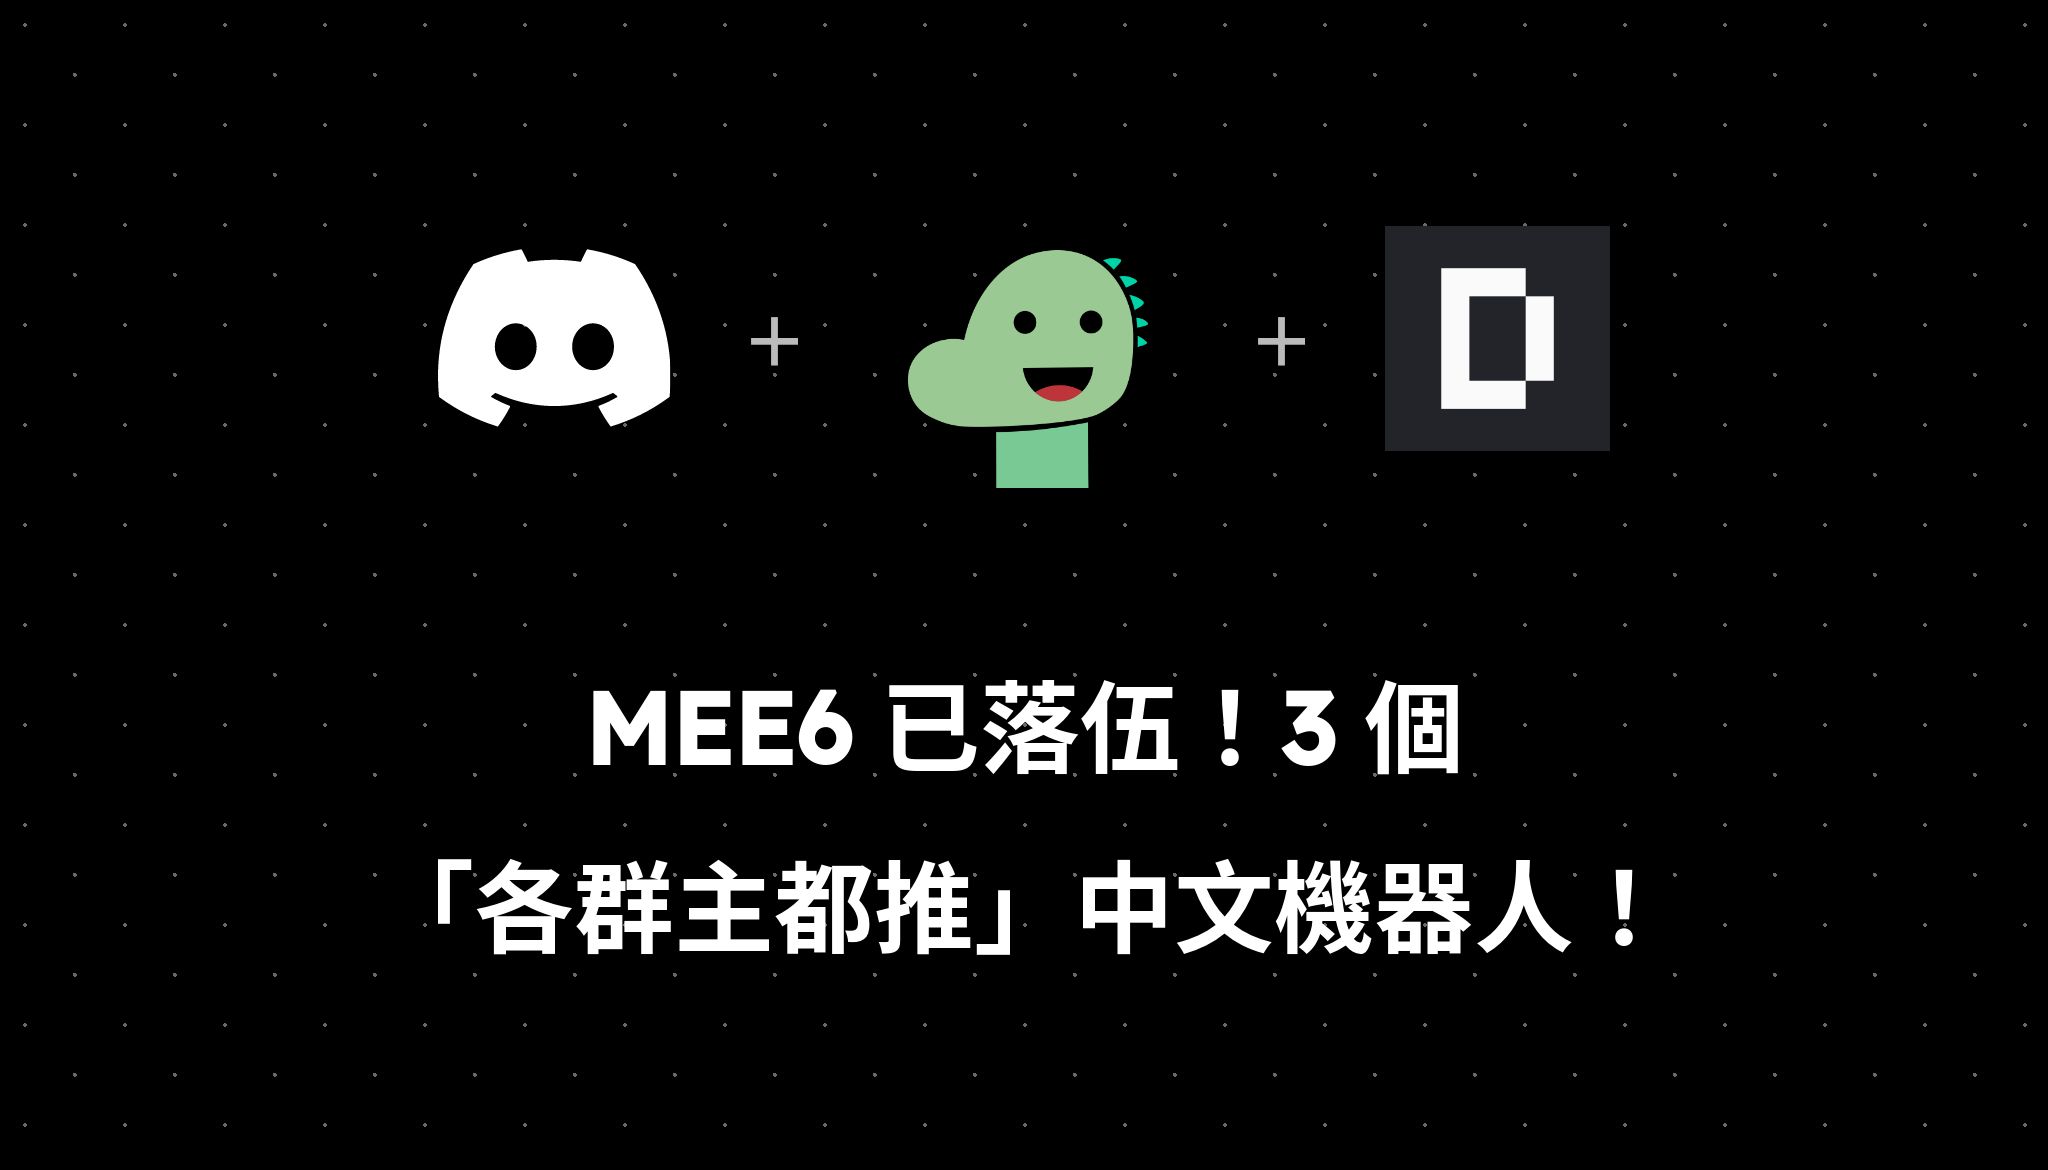 Top Chinese Discord Bot Yeecord